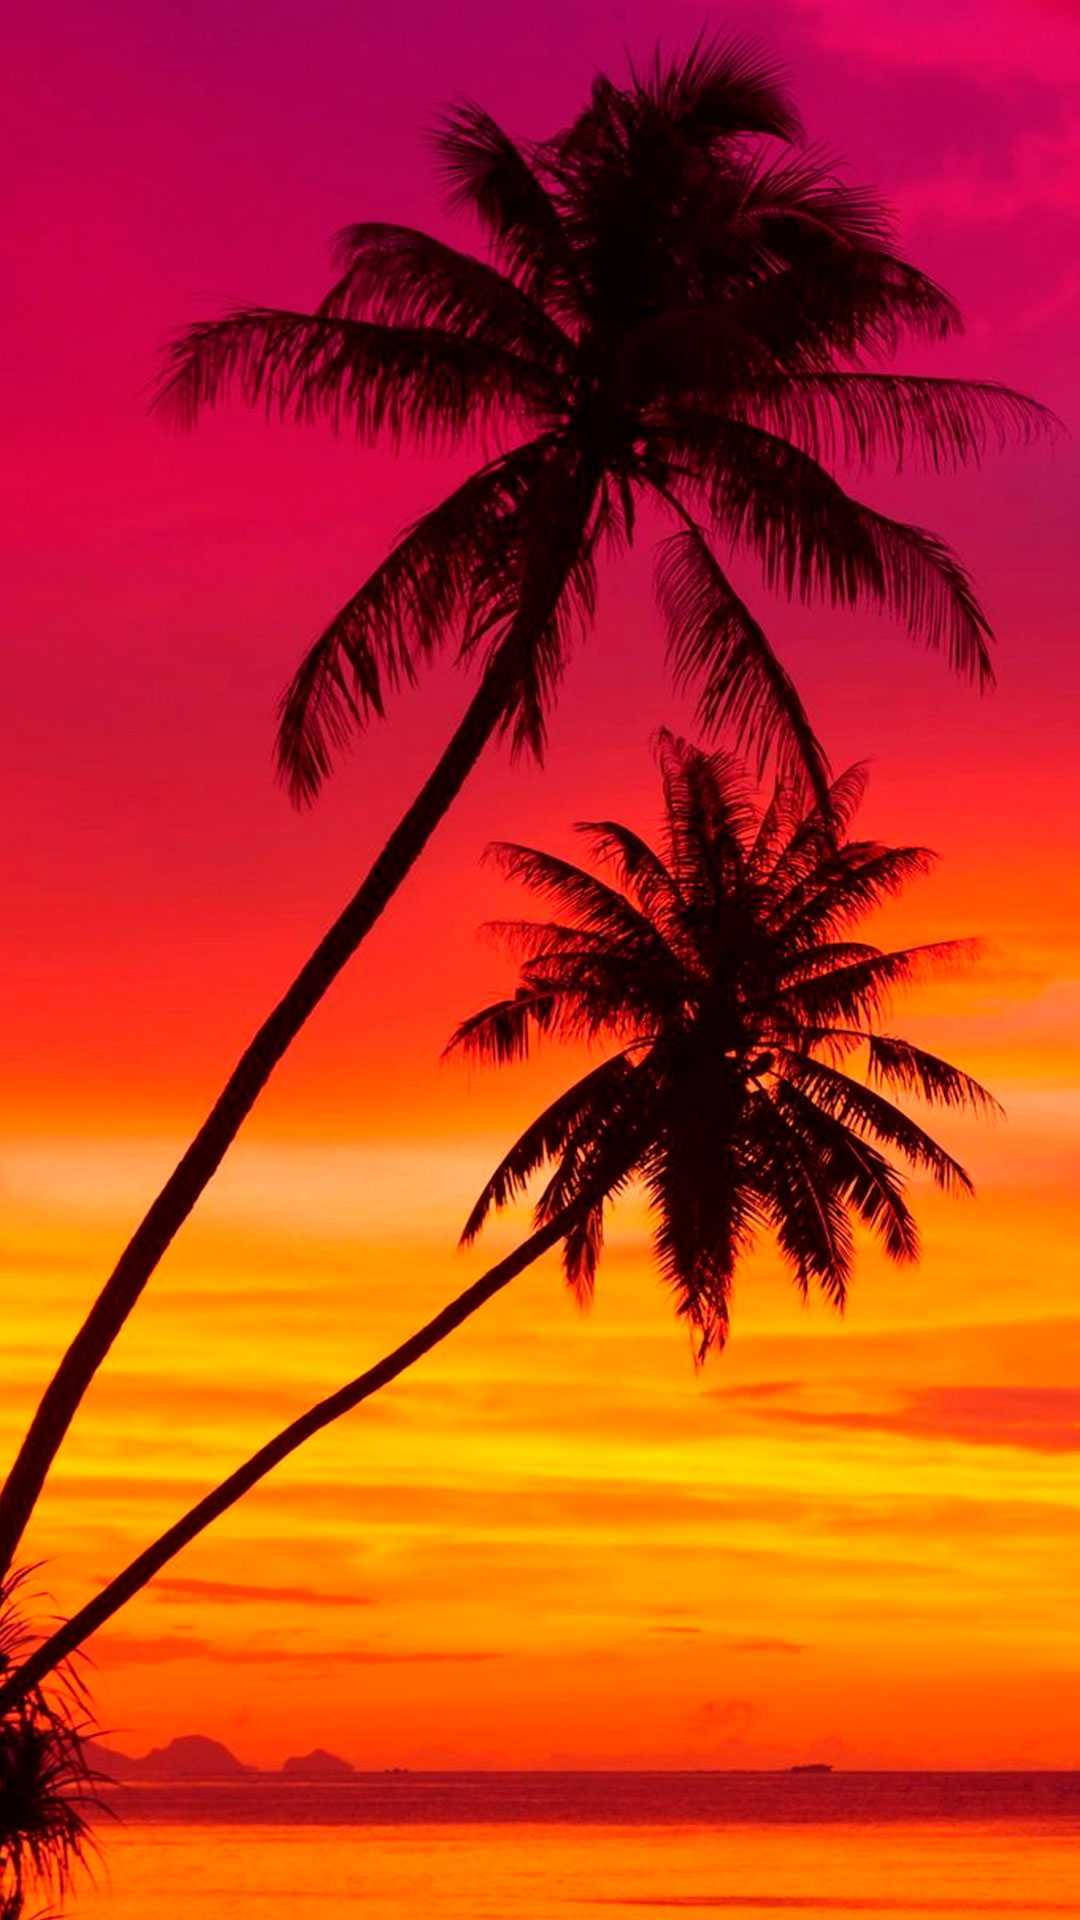 Scenic Sunset Iphone Screensaver